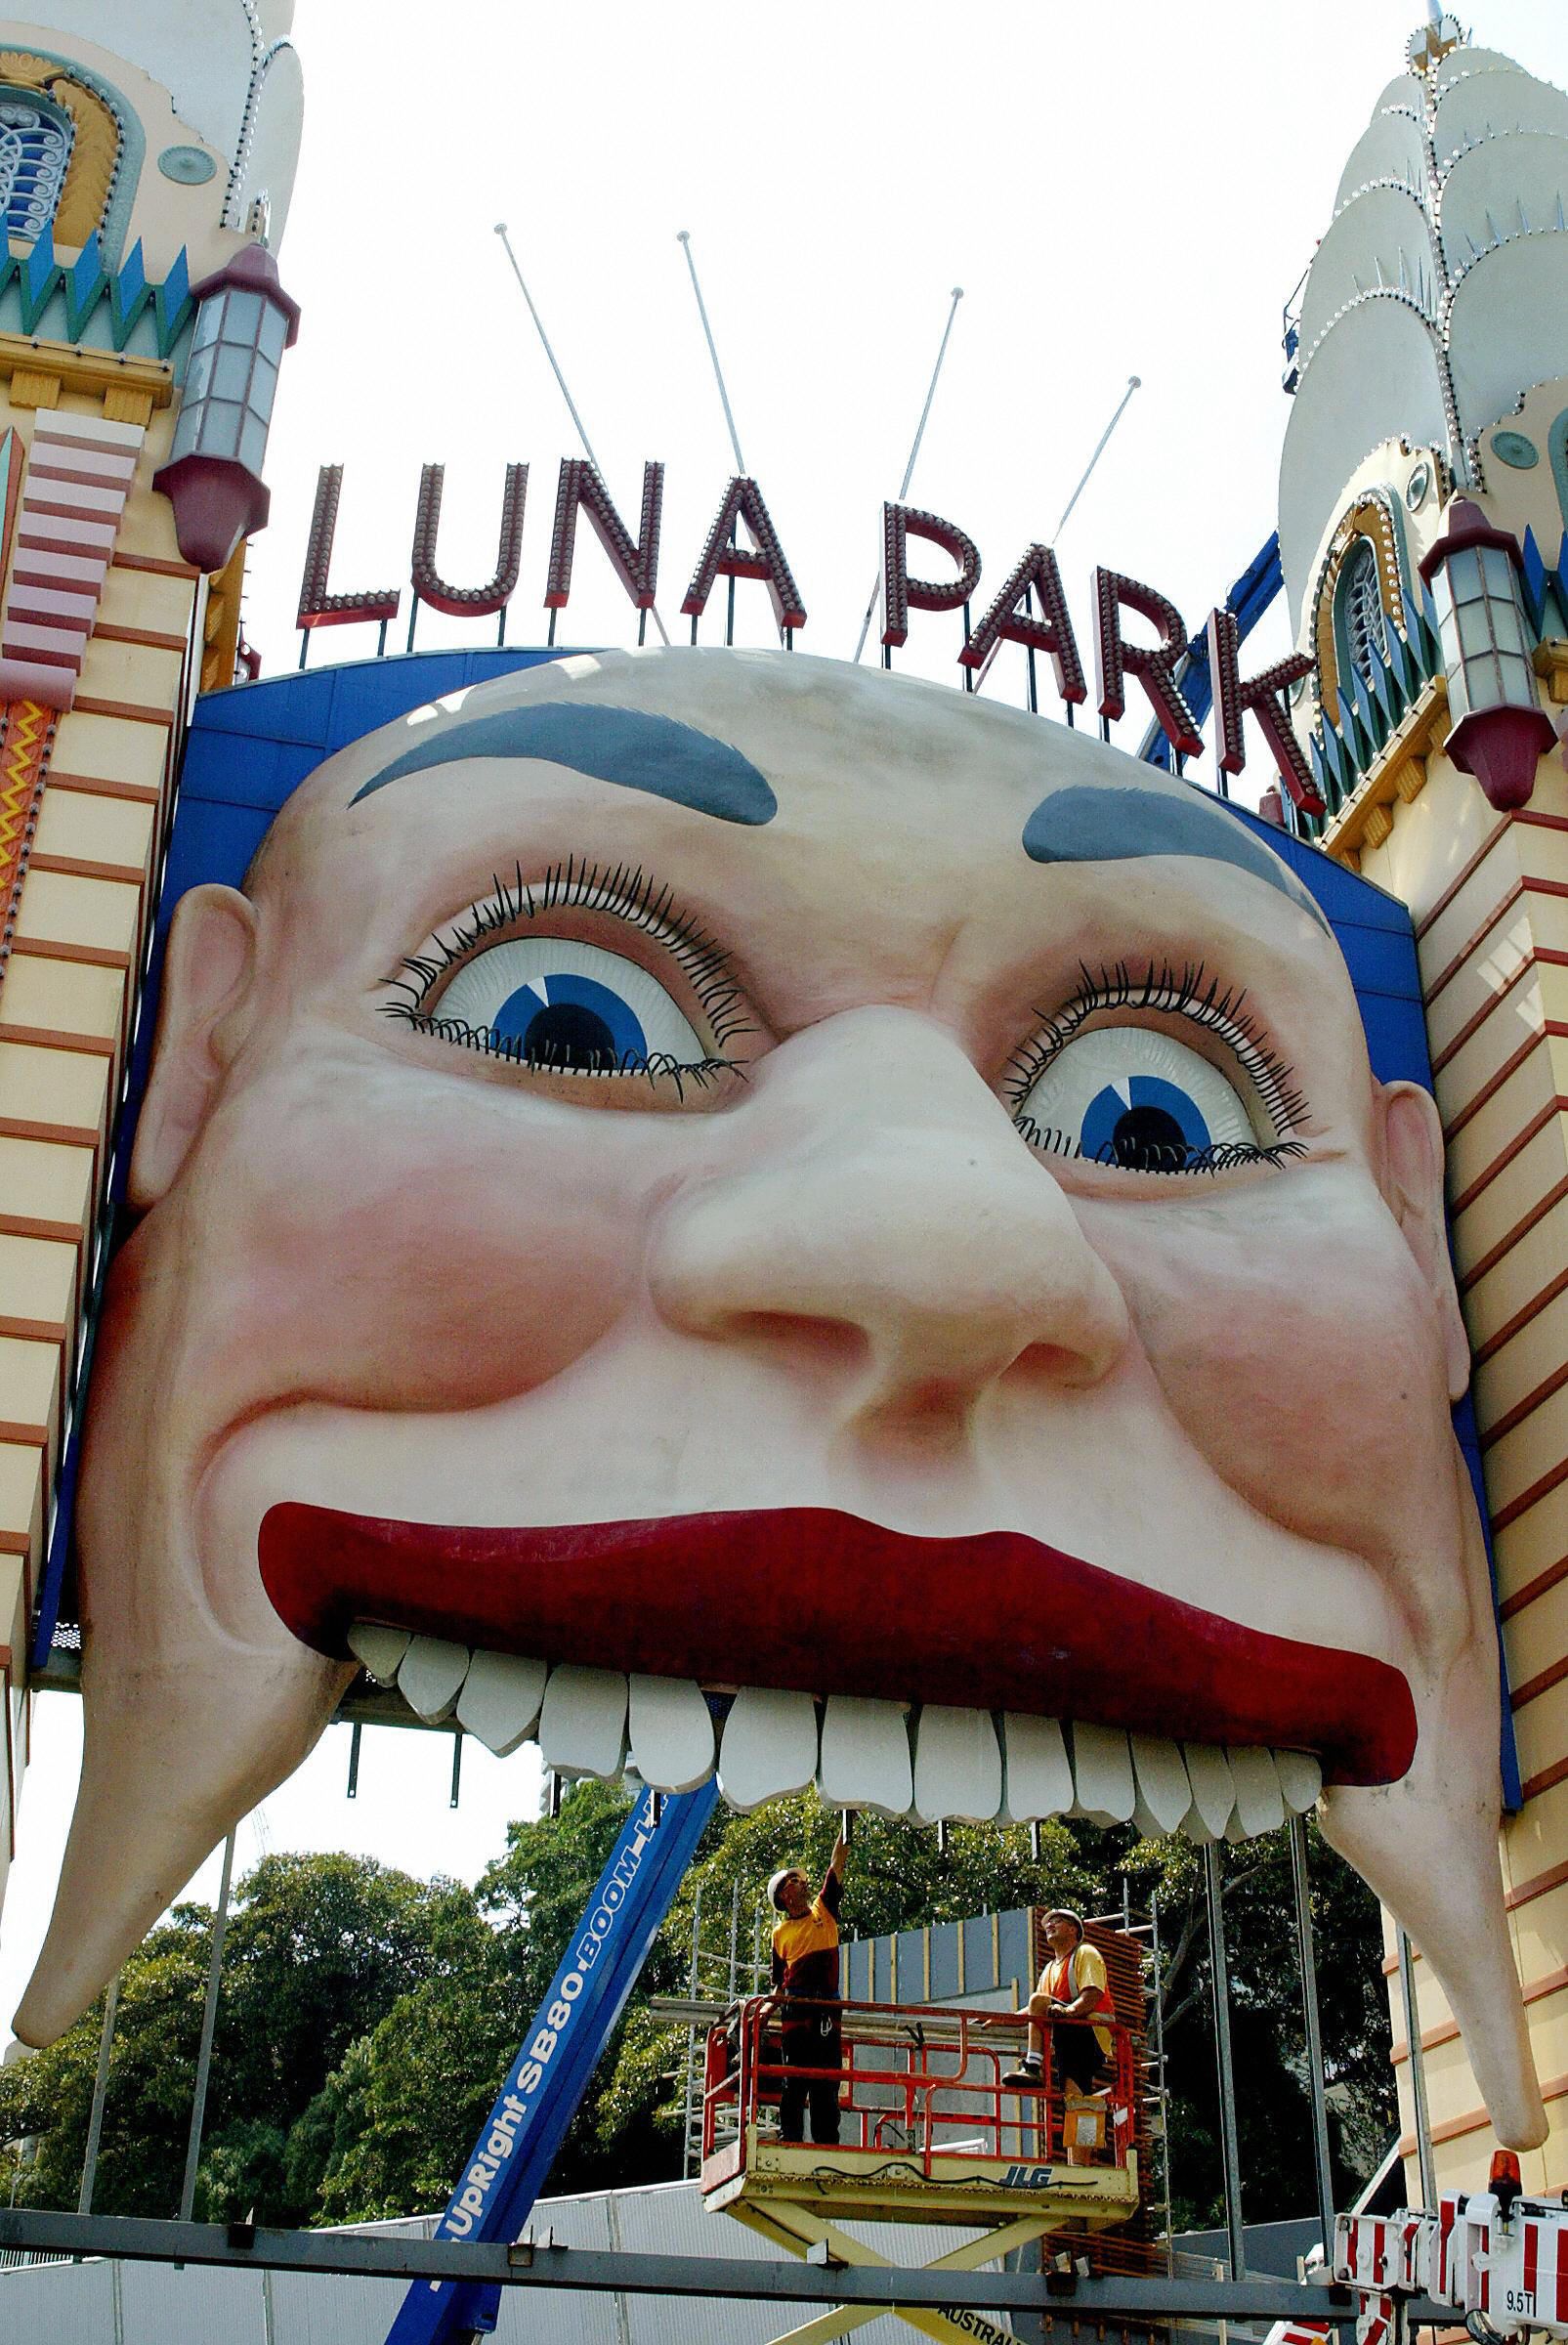 Haunted Locations: Dreamworld Theme Park, Australia – Ghost sits next to  you on a rollercoaster ride - DarkmoonDarkmoon